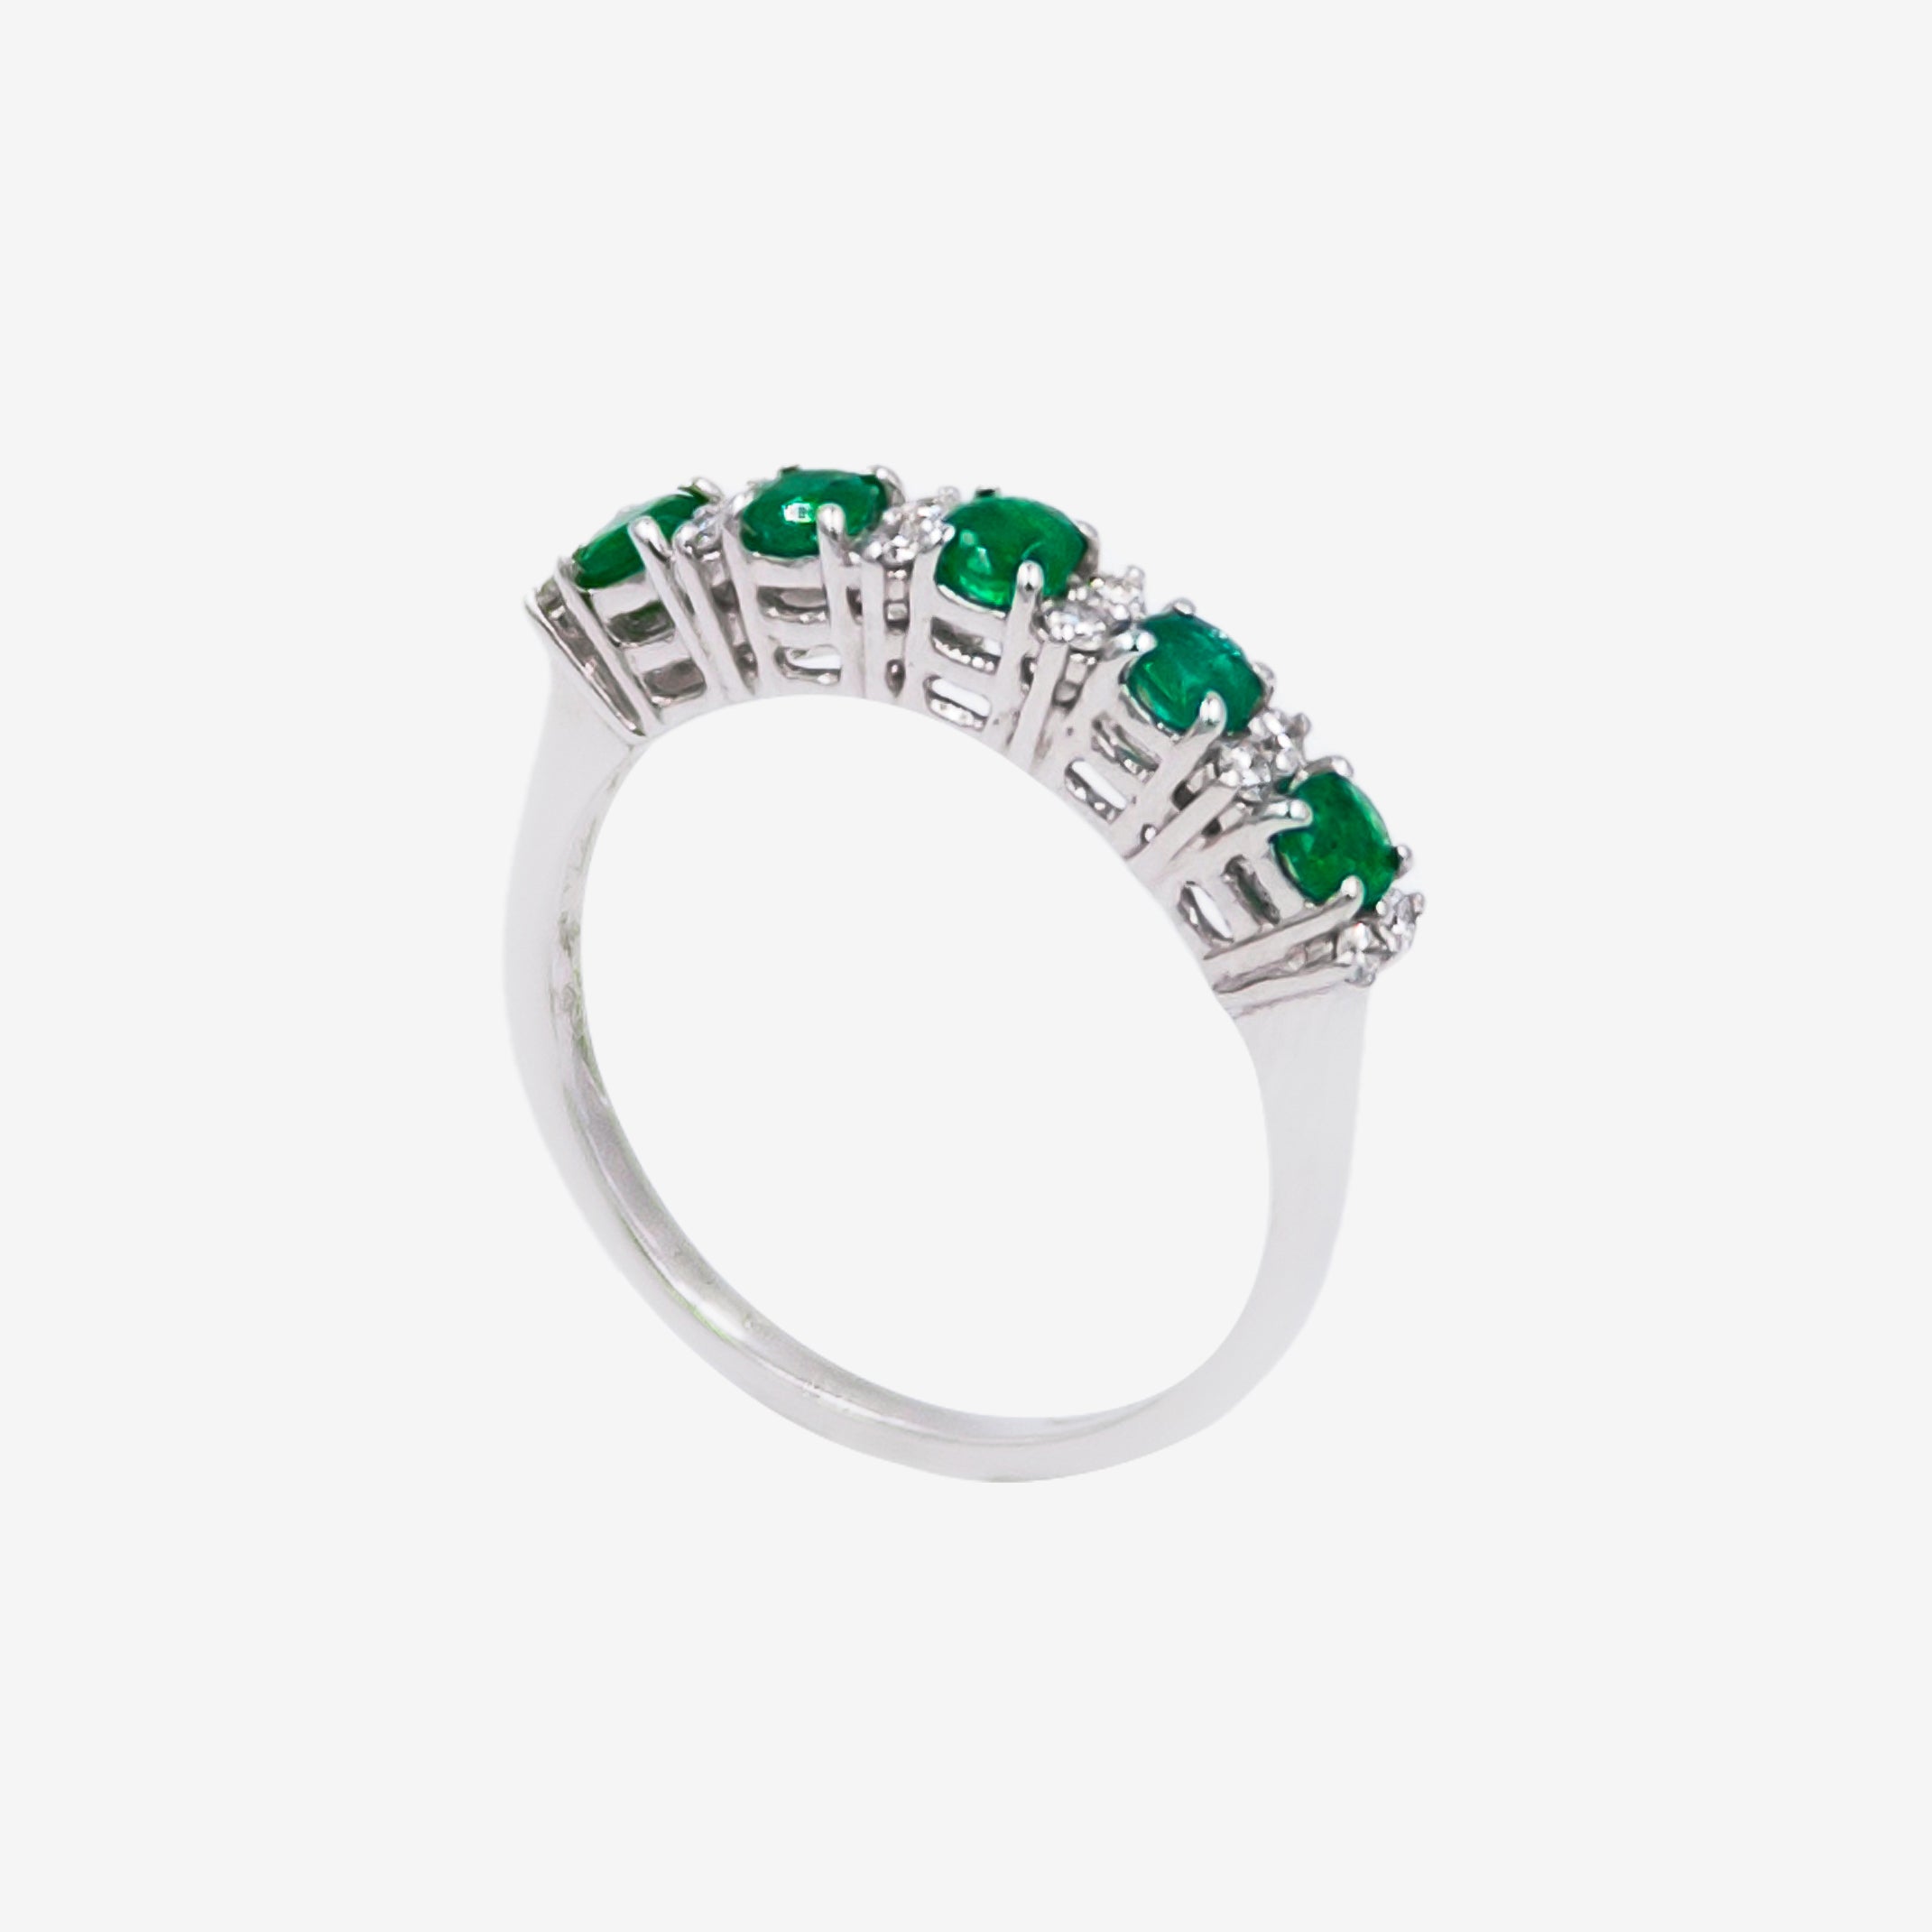 Exquisite Emerald Ring with Diamonds